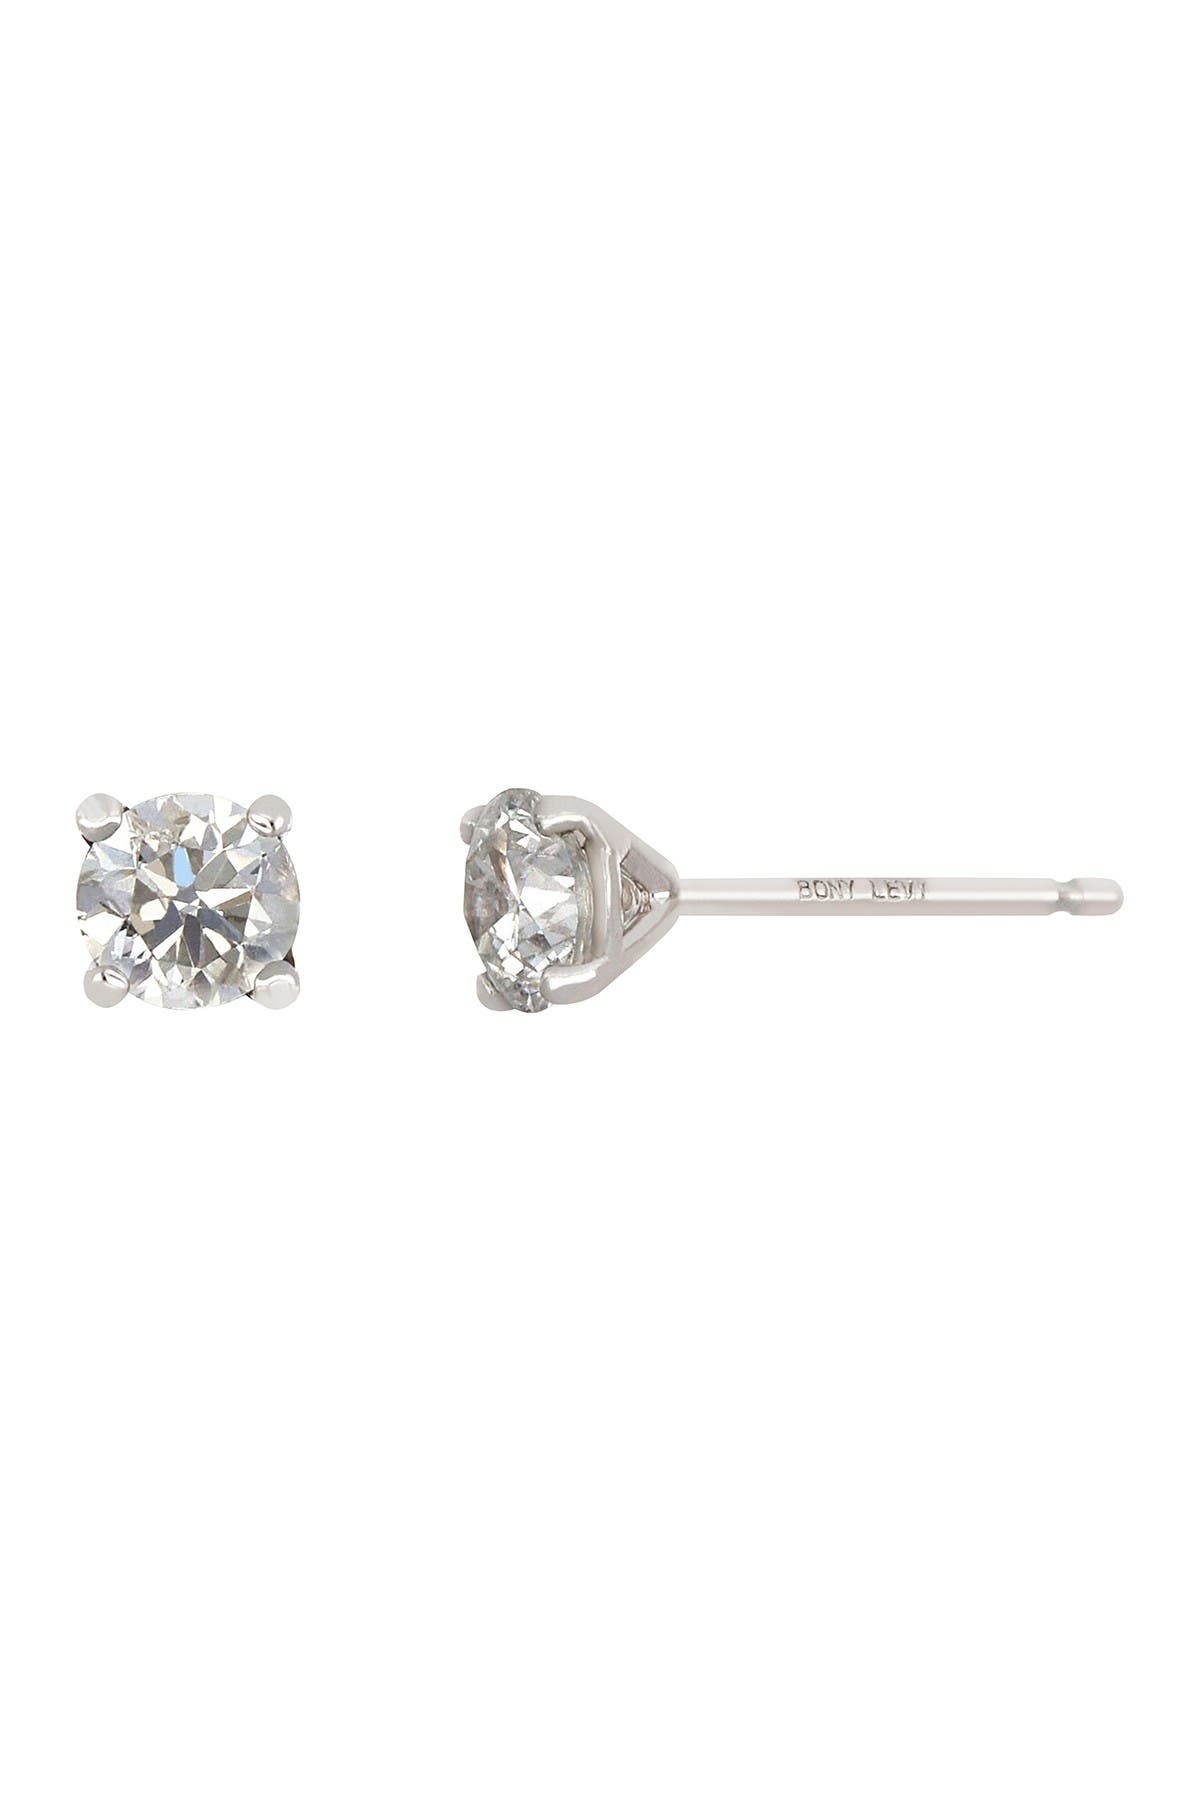 Bony Levy Diamond Earrings Flash Sales, UP TO 65% OFF | www 